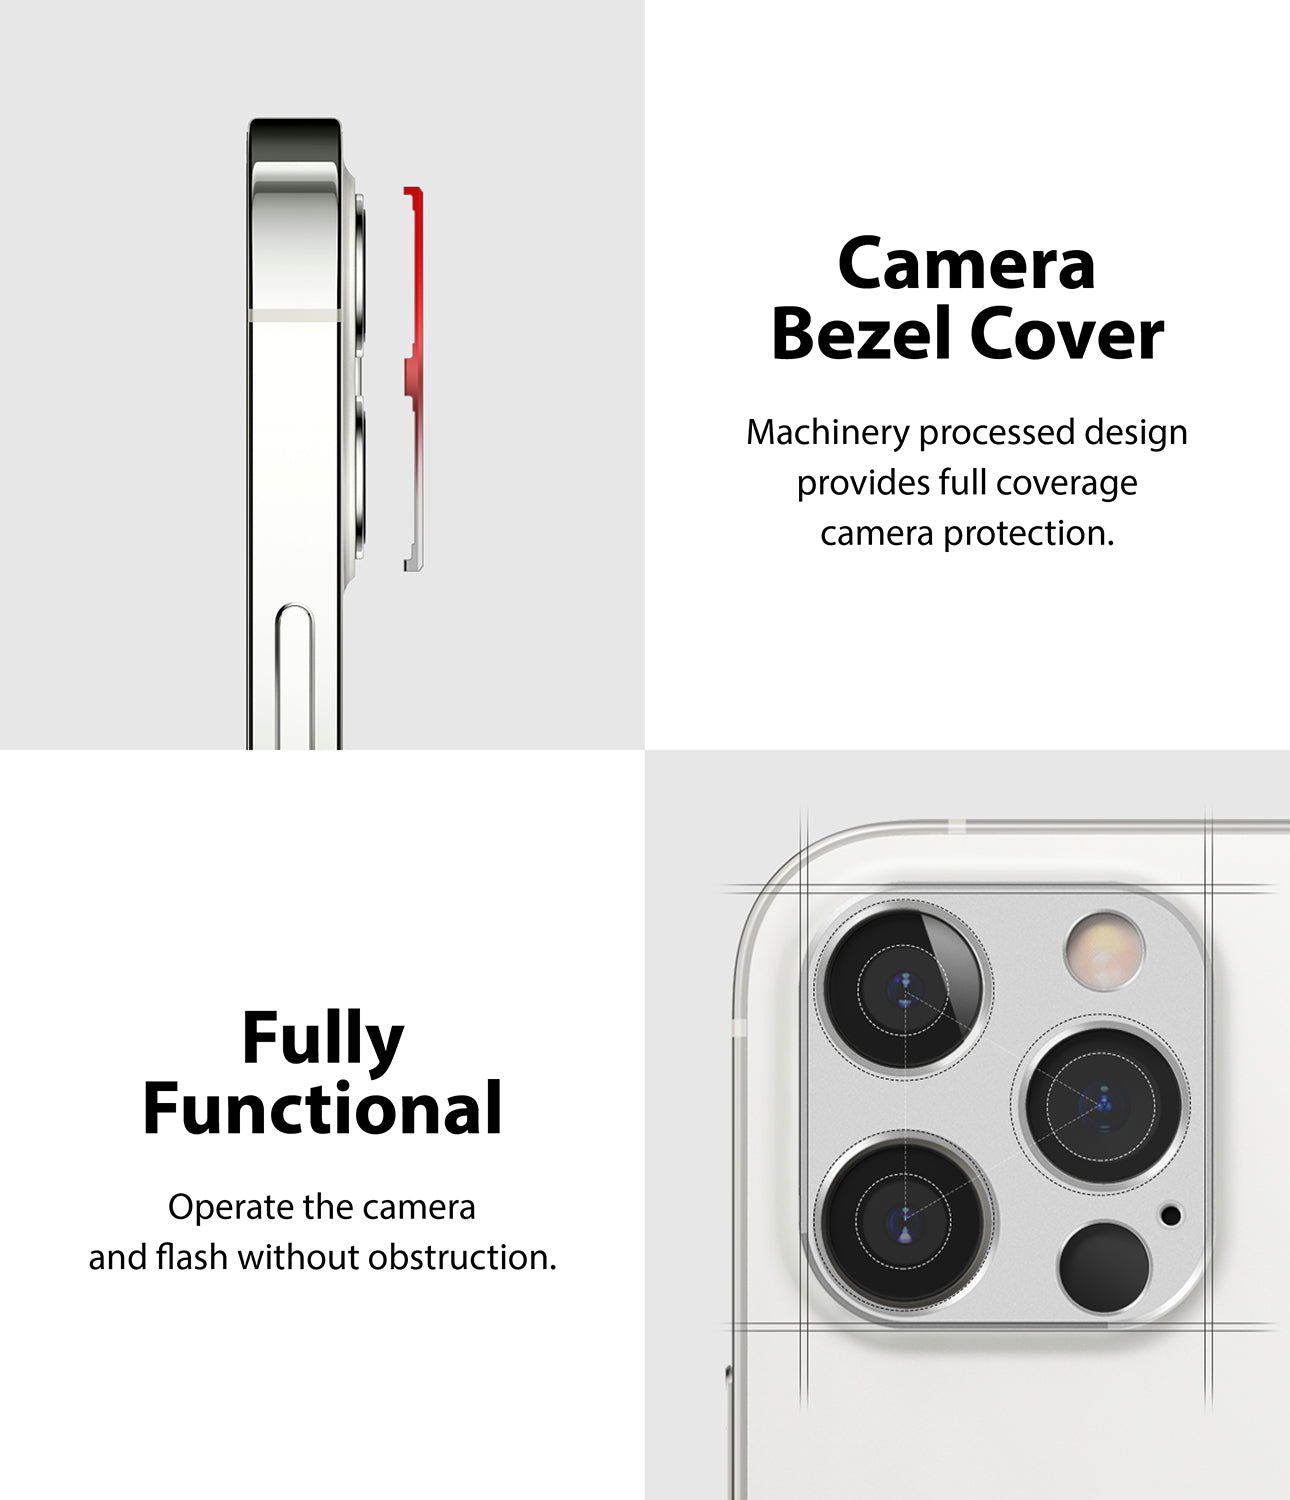 iPhone 12 Pro | Camera Styling